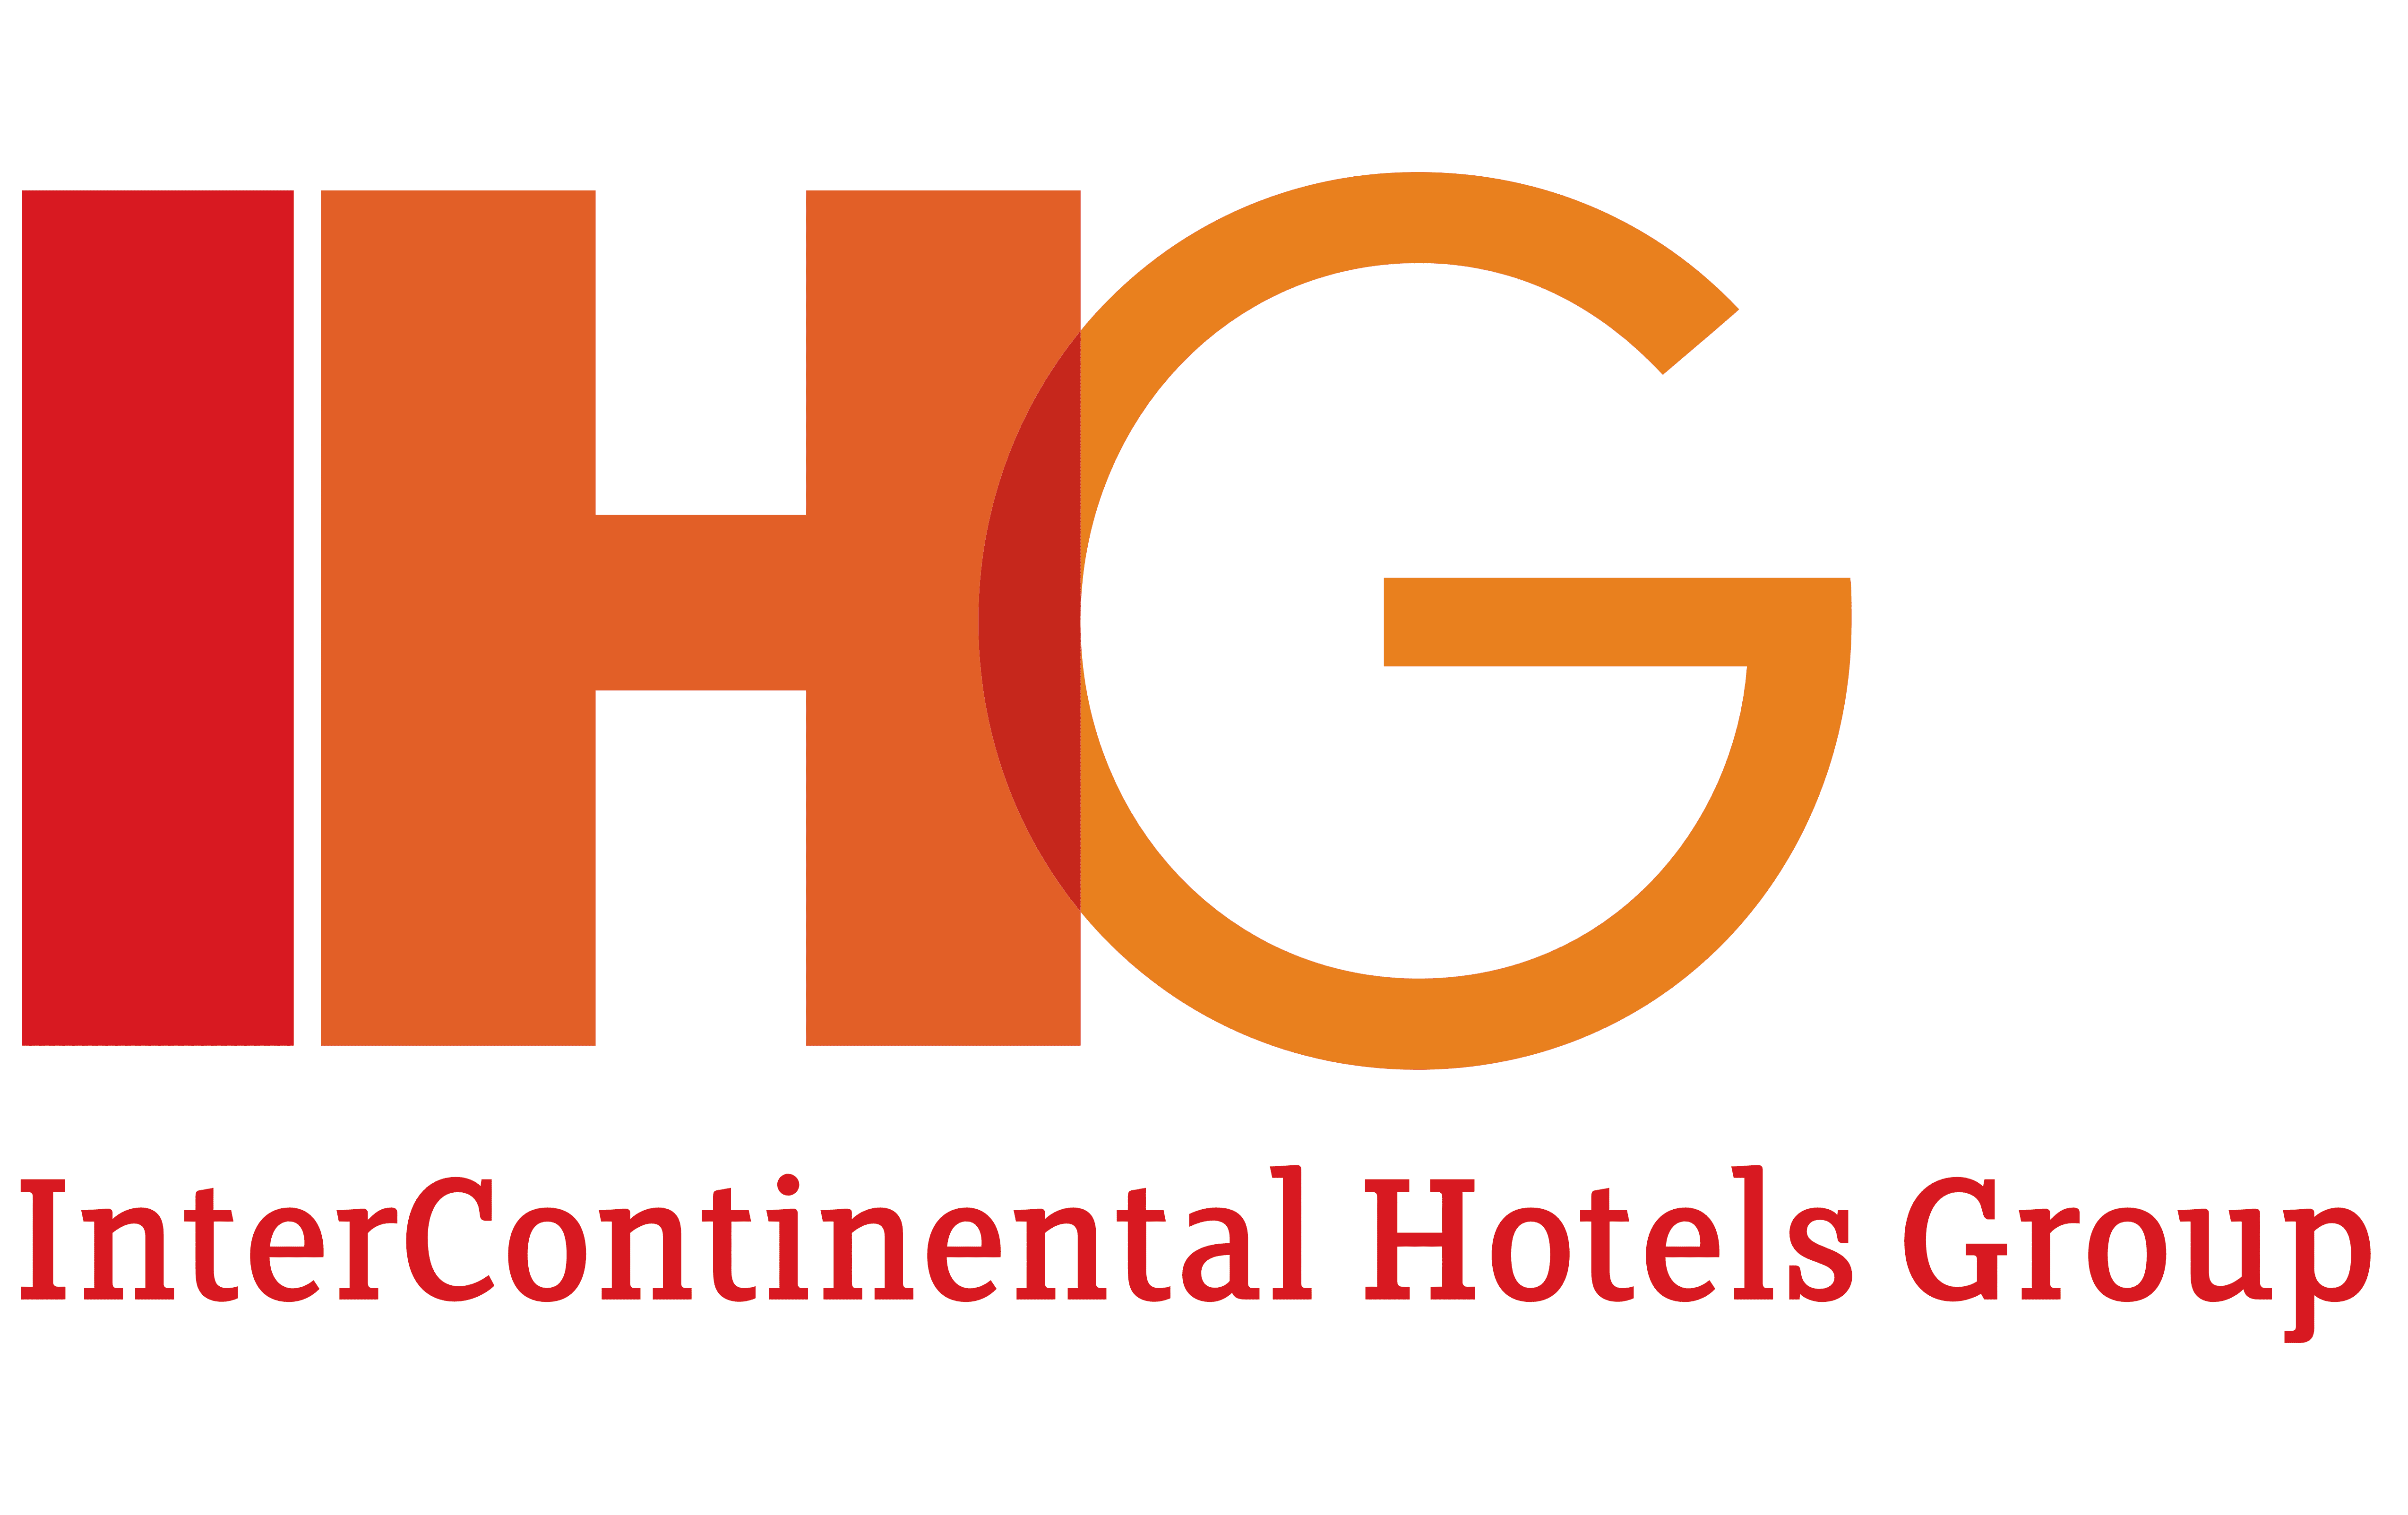 IHG Hotel